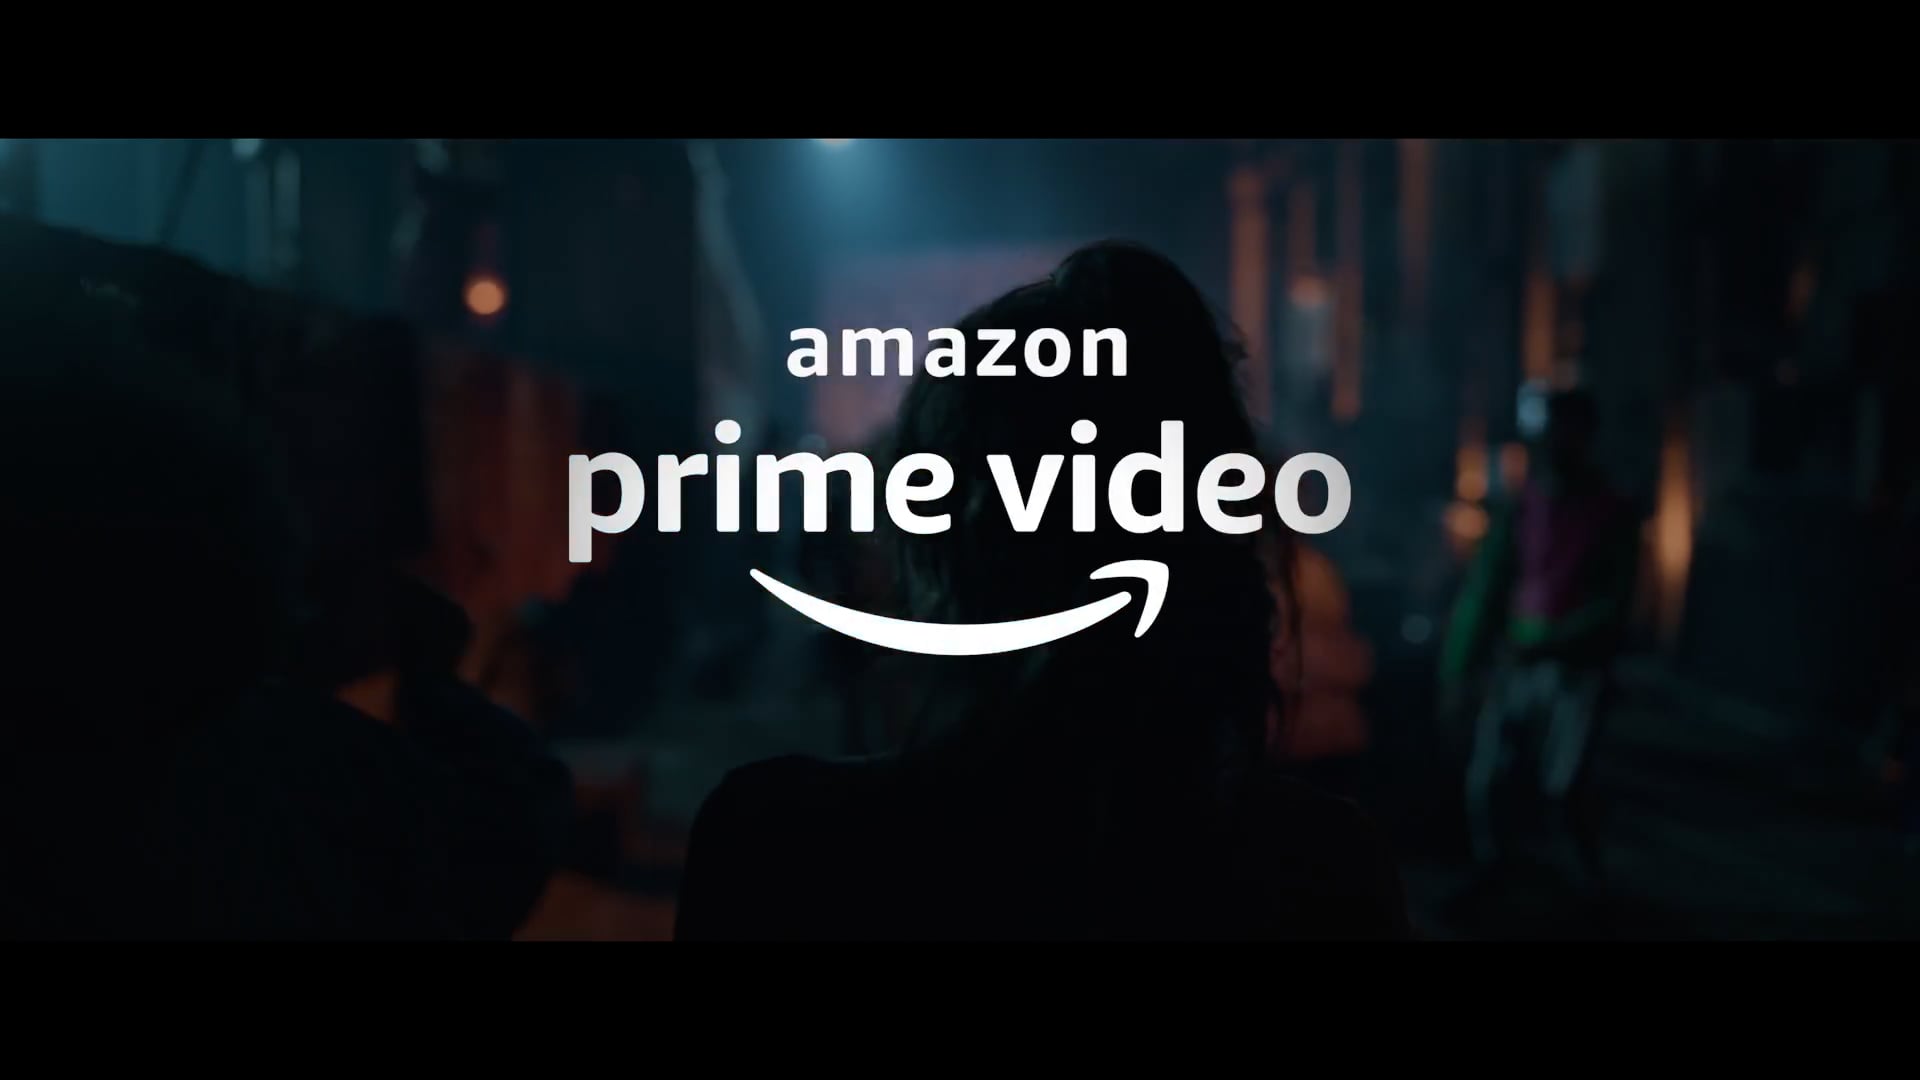 Lov3 - Temporada 1 - Trailer Oficial | Amazon Prime Video